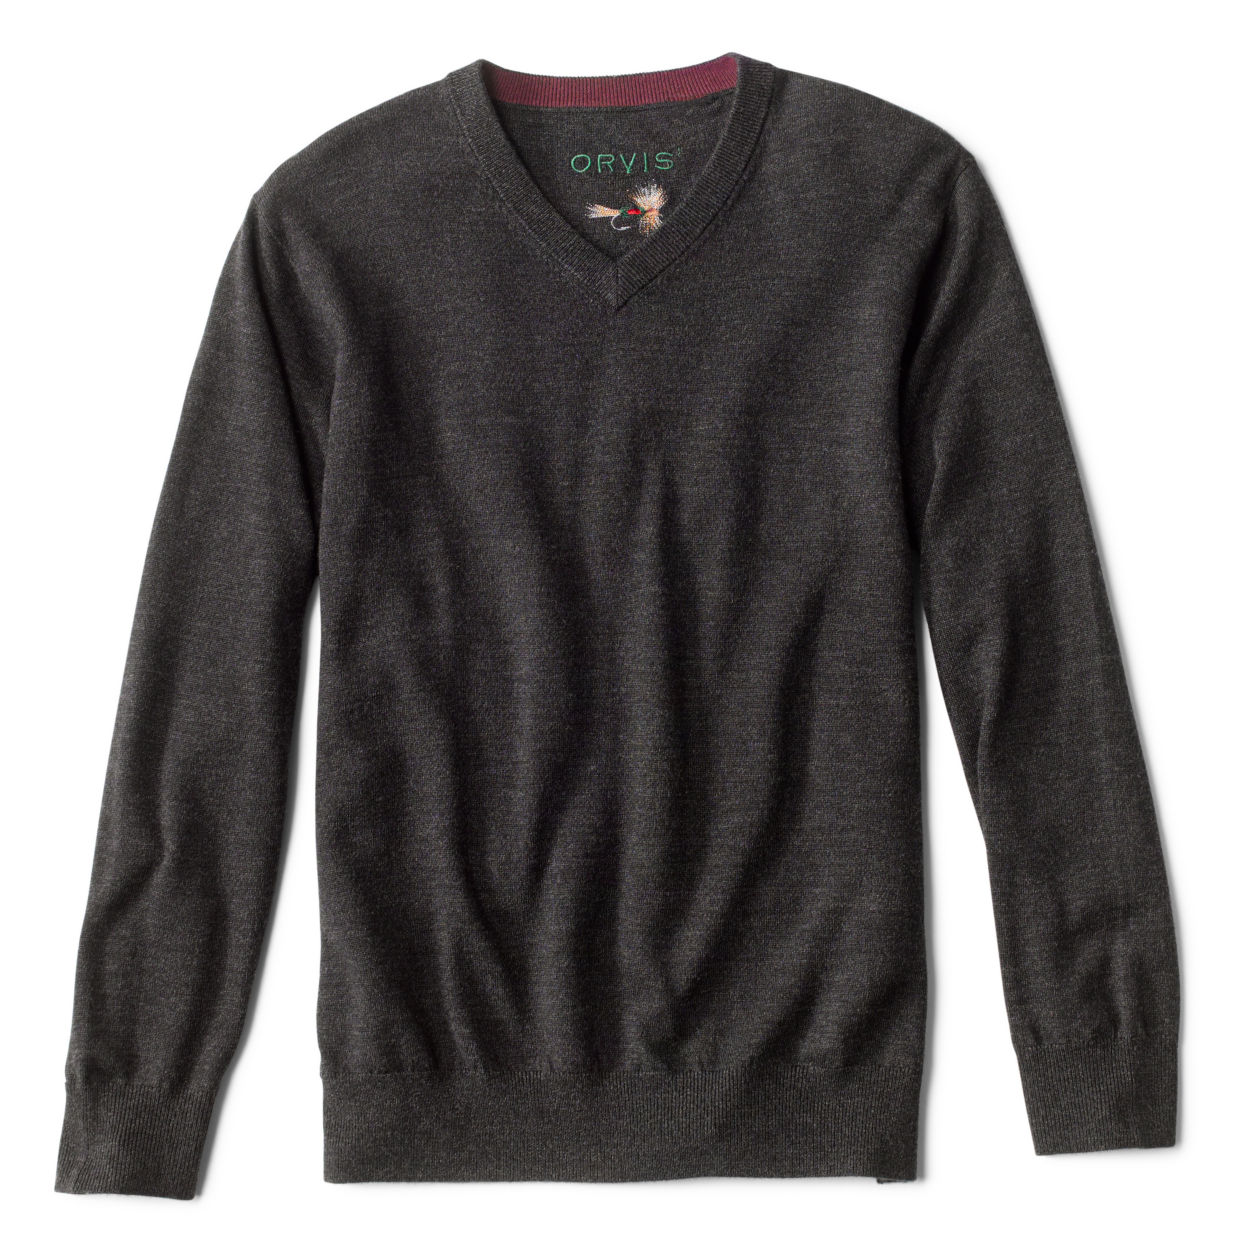 ROCKBERRY Mens Orignals Plain Sweatshirt Jumper Sweater Pullover Work Casual Leisure Top 